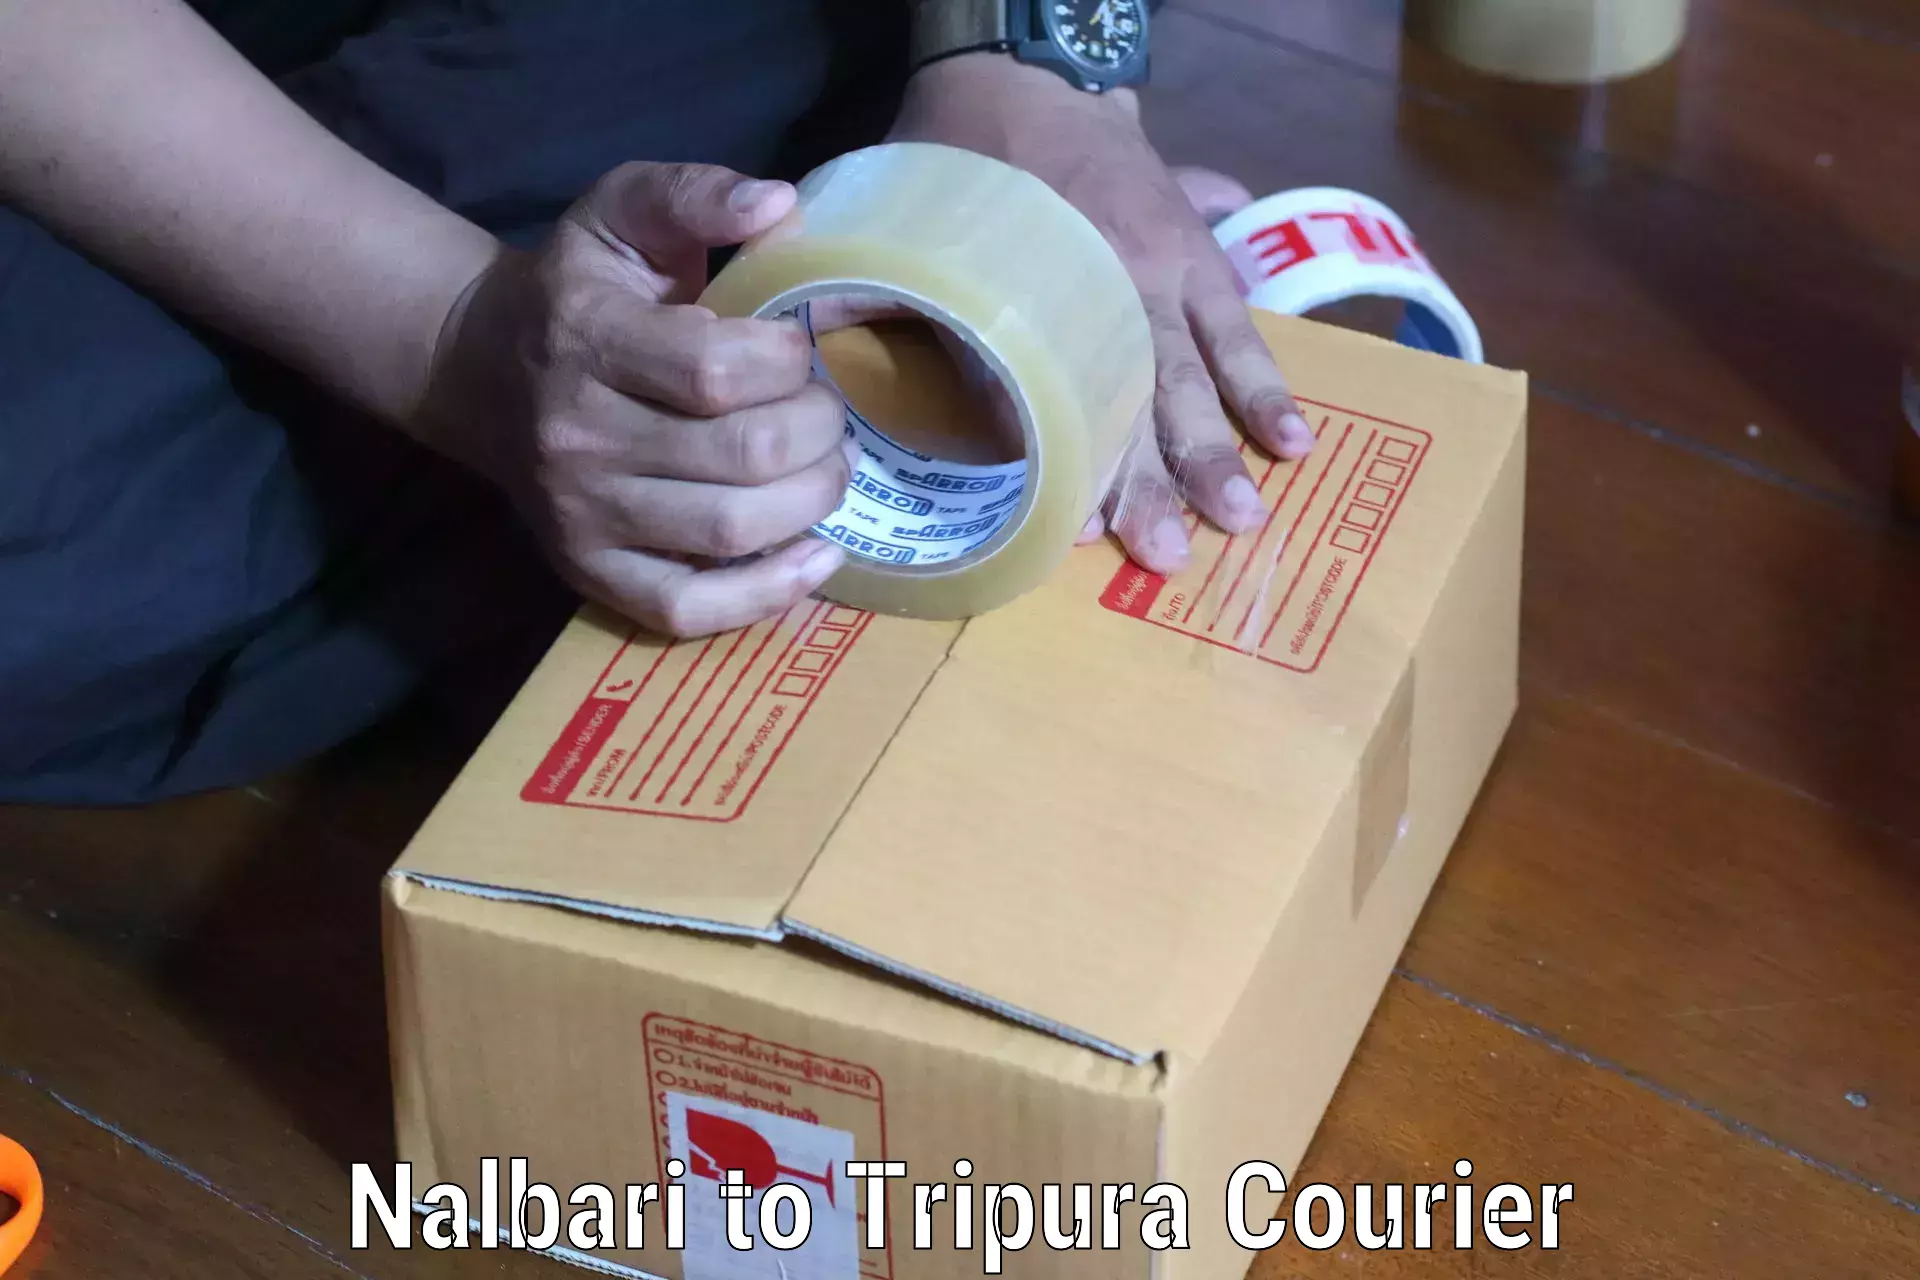 Easy access courier services in Nalbari to Agartala